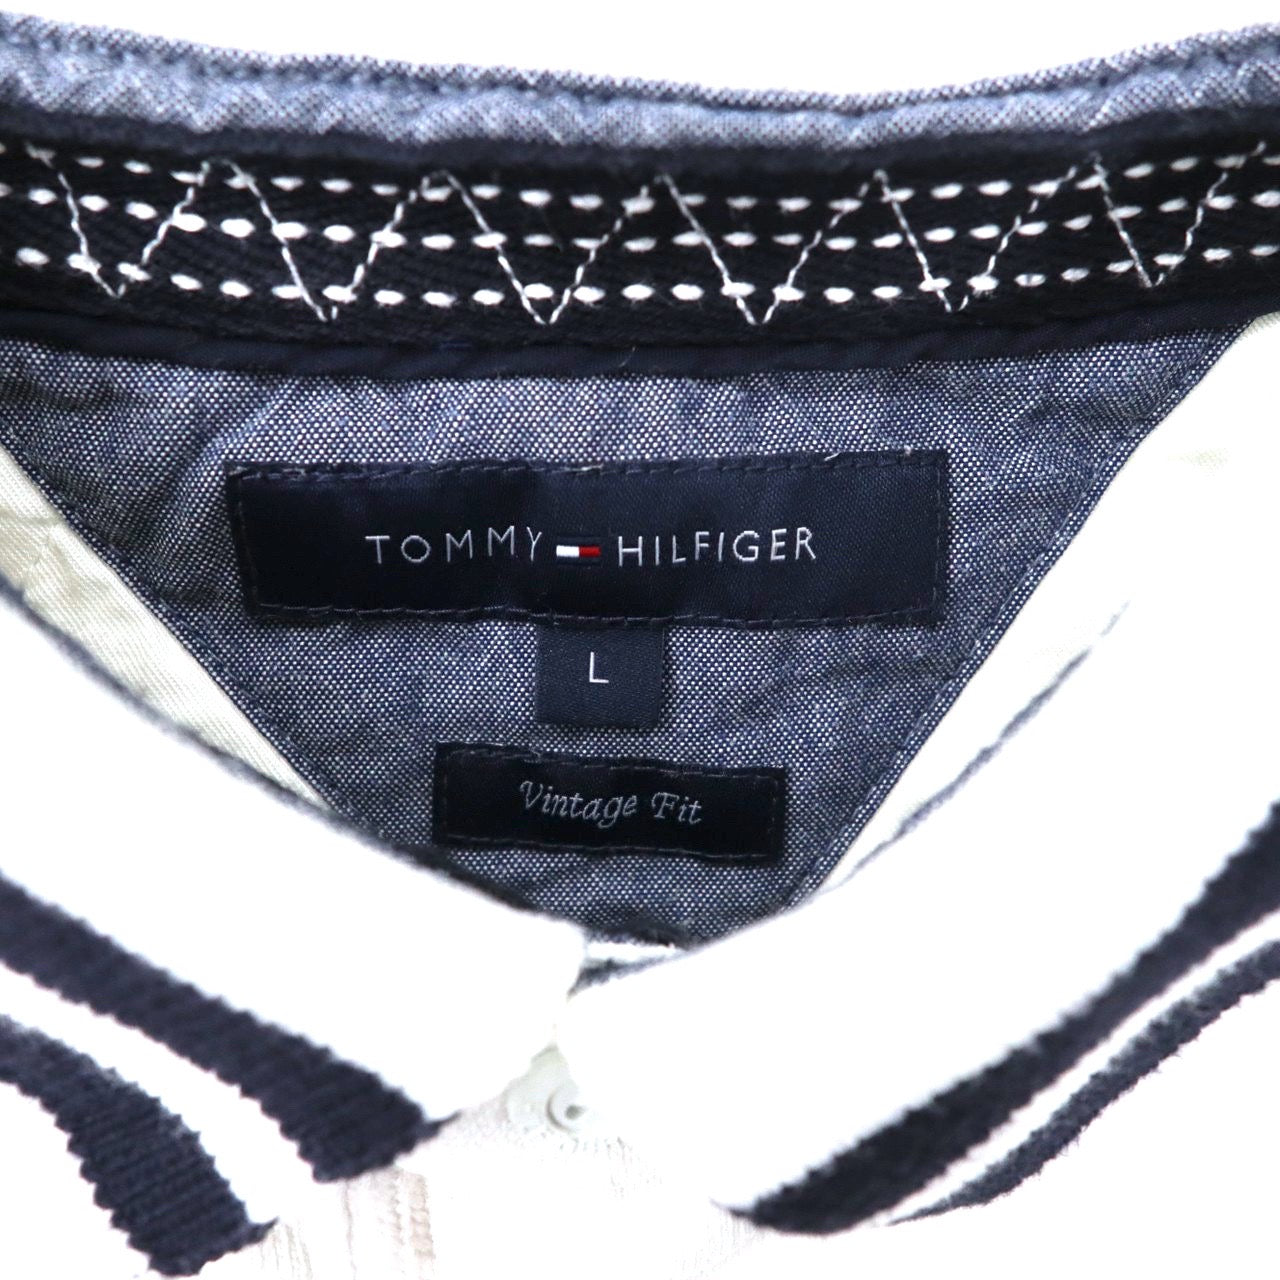 TOMMY HILFIGER リブライン ラガーシャツ L ホワイト コットン ロゴ刺繍 ナンバリング VINTAGE FIT